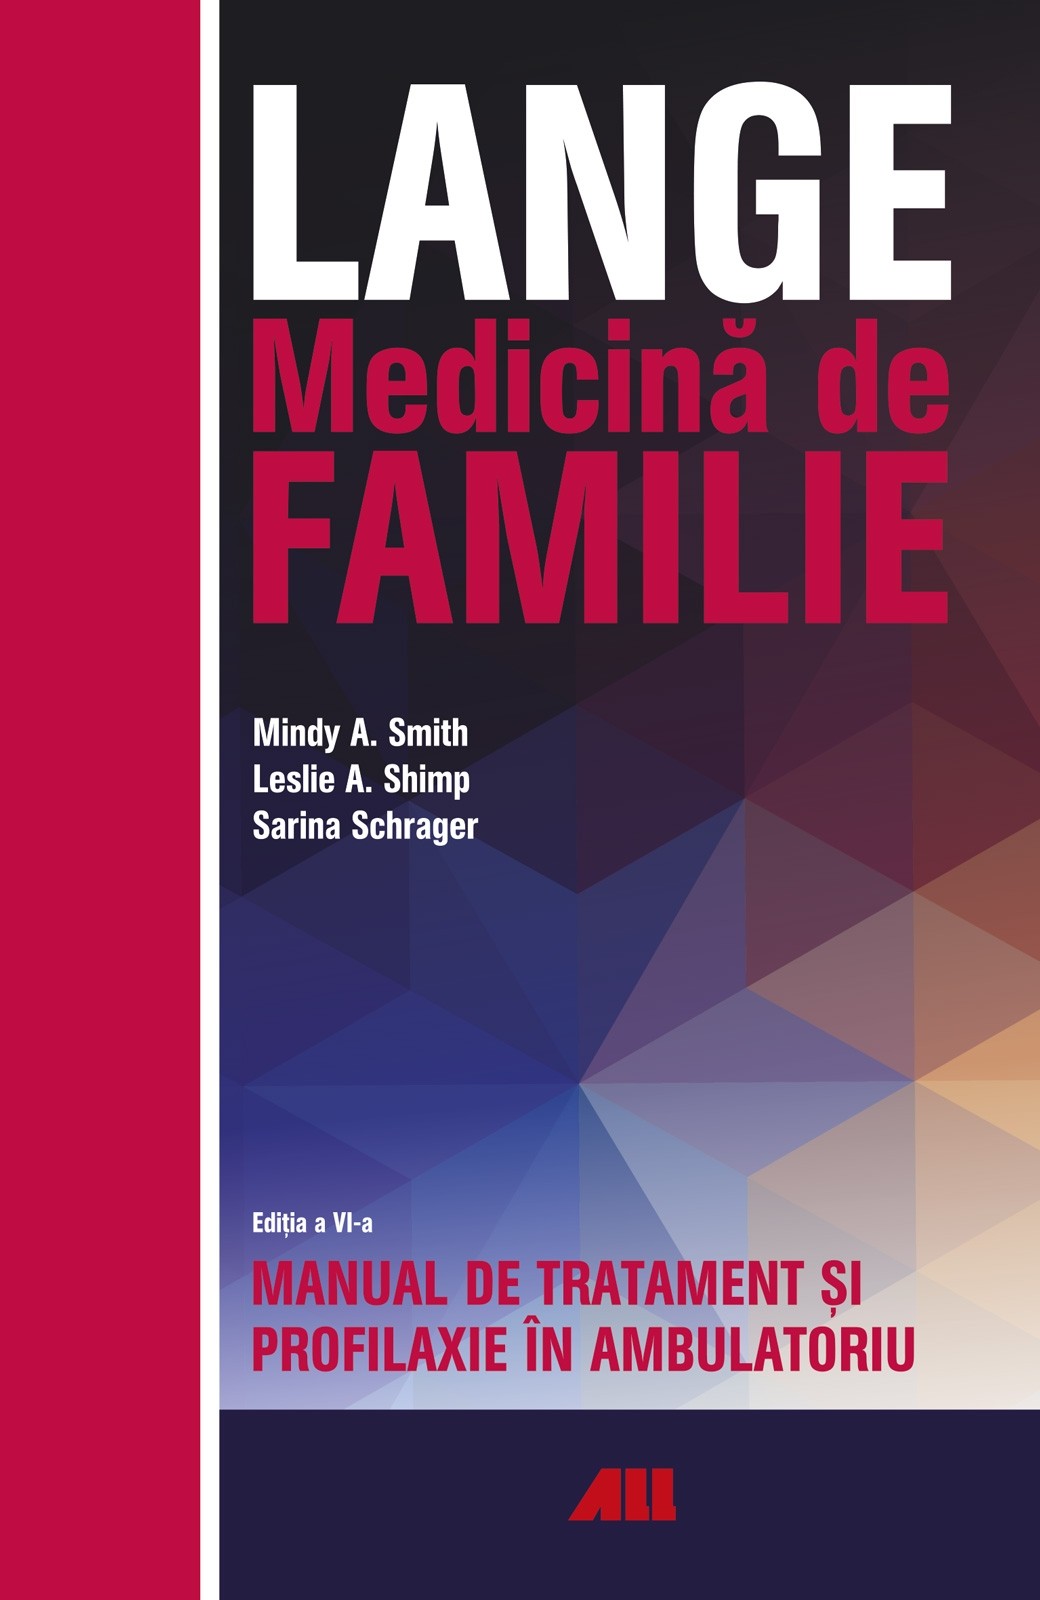 LANGE. Medicina de familie | Leslie A. Shimp, Mindy A. Smith, Sarina Schrager ALL poza bestsellers.ro